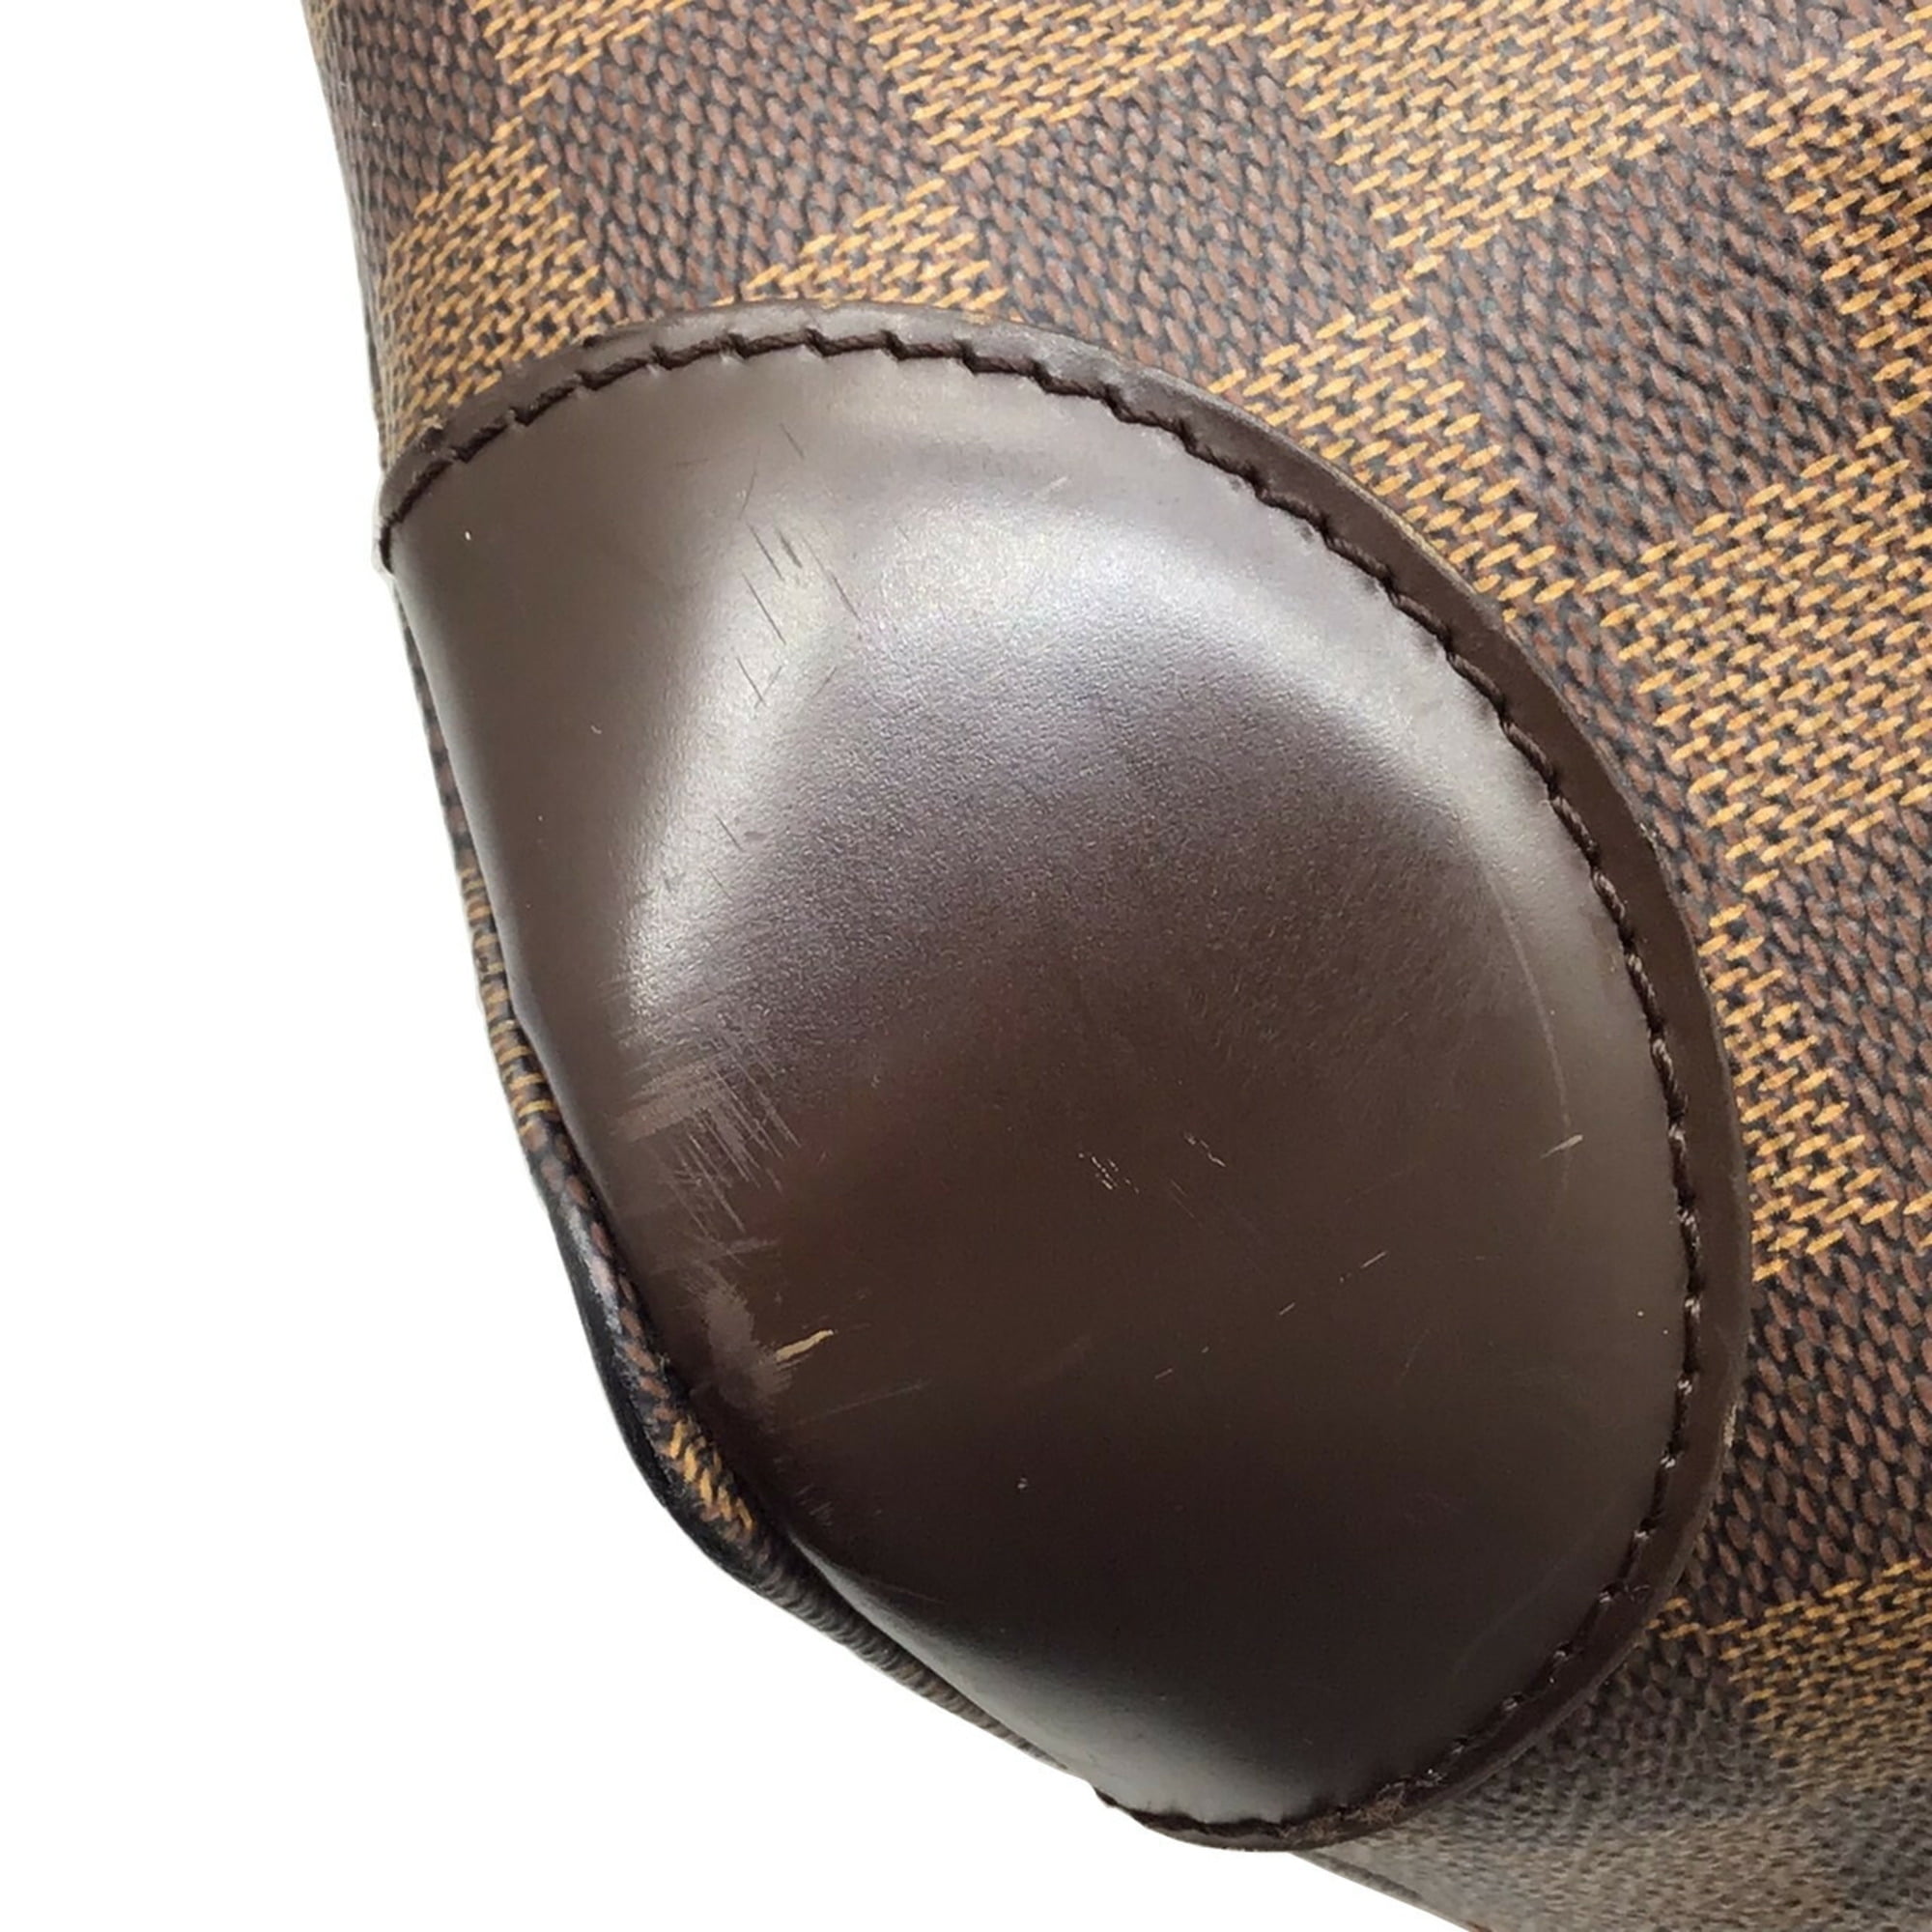 Authenticated Used Louis Vuitton Damier Hampstead MM Handbag Tote Bag  N51204 Brown Ebene PVC Leather Women's LOUIS VUITTON 